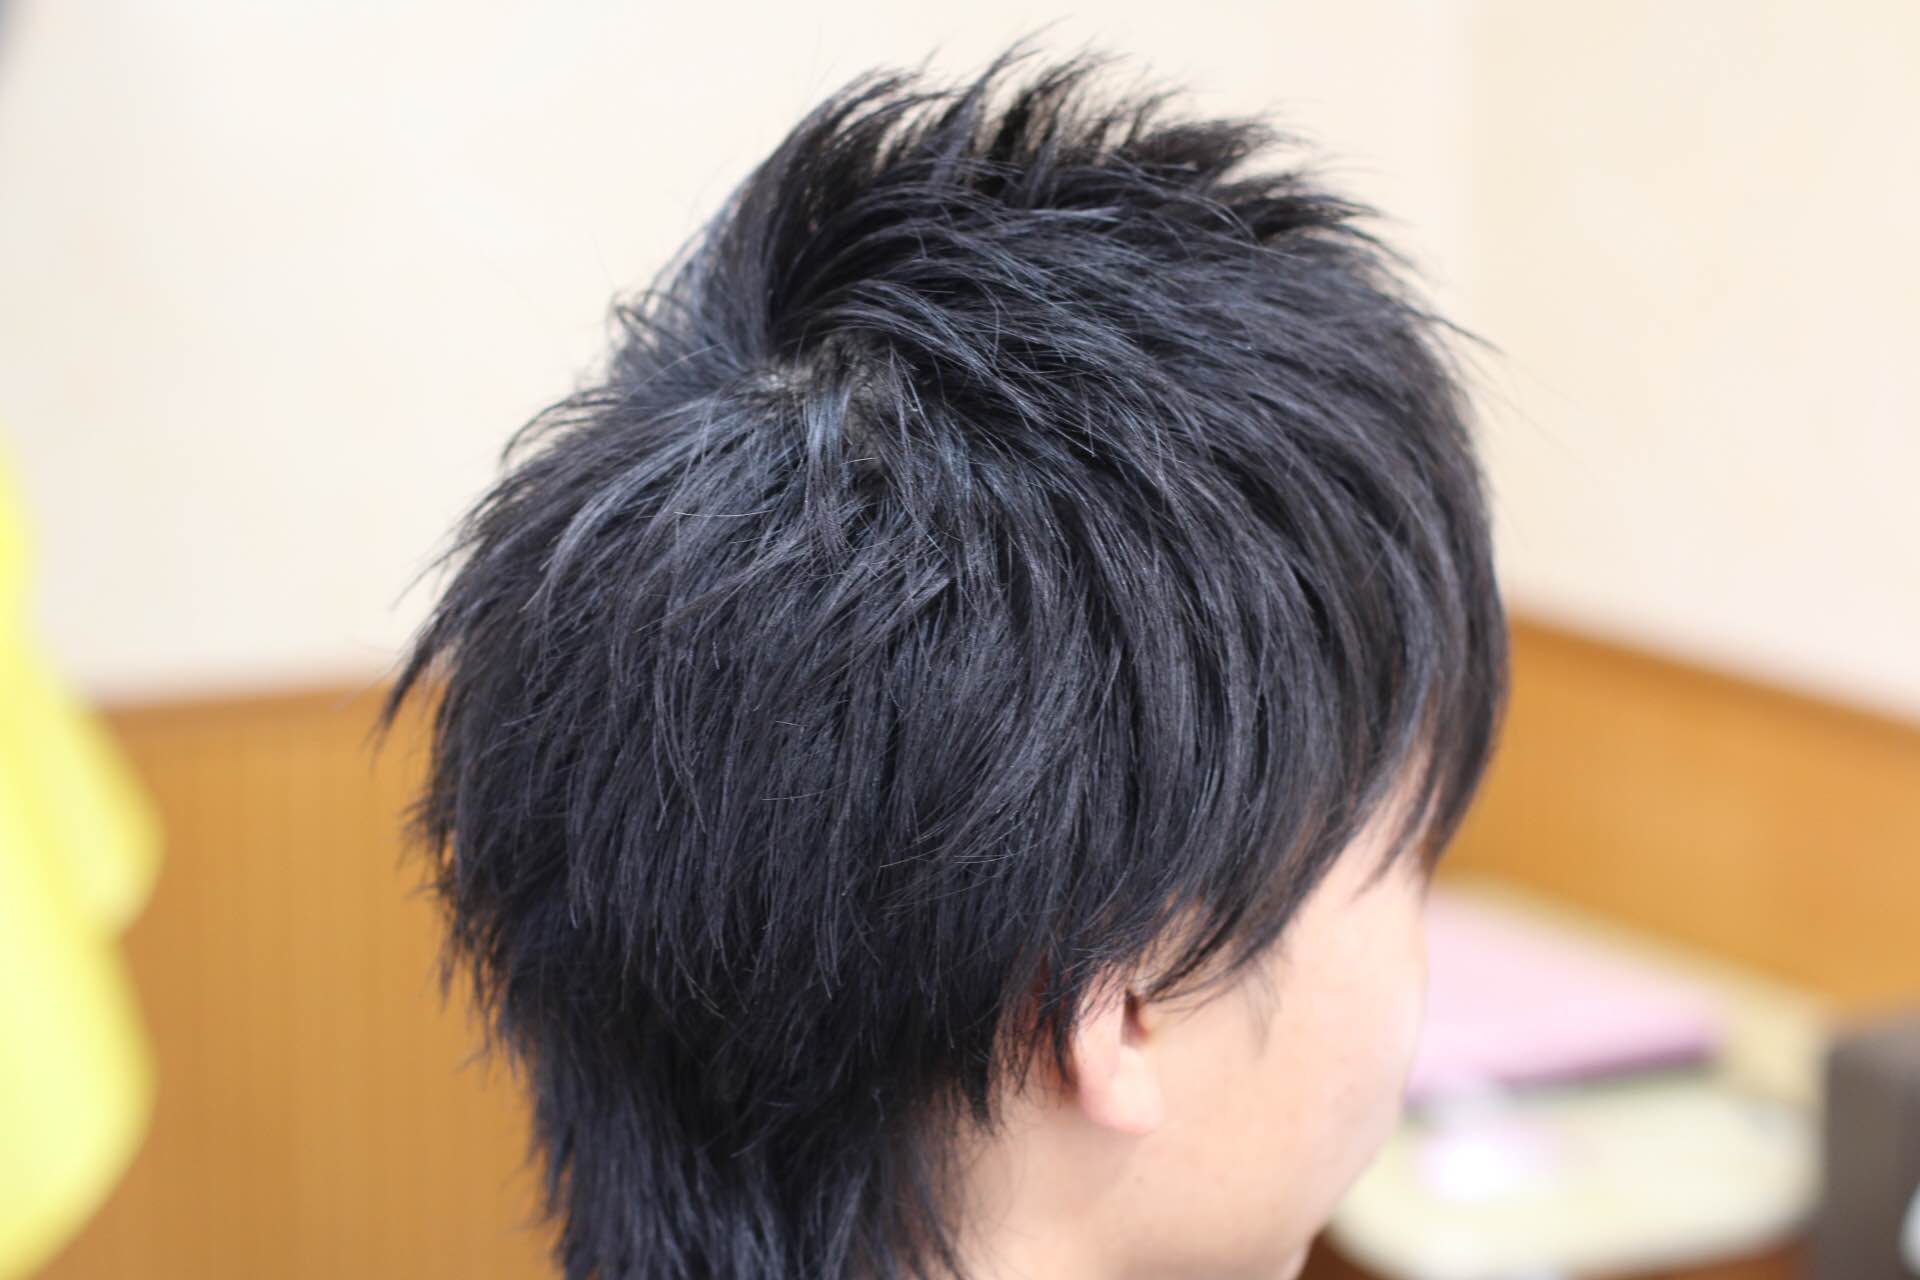 HAIR'S ROOM KUNO【ヘアーズルームクノ】のスタイル紹介。ソフトスパイキーヘア